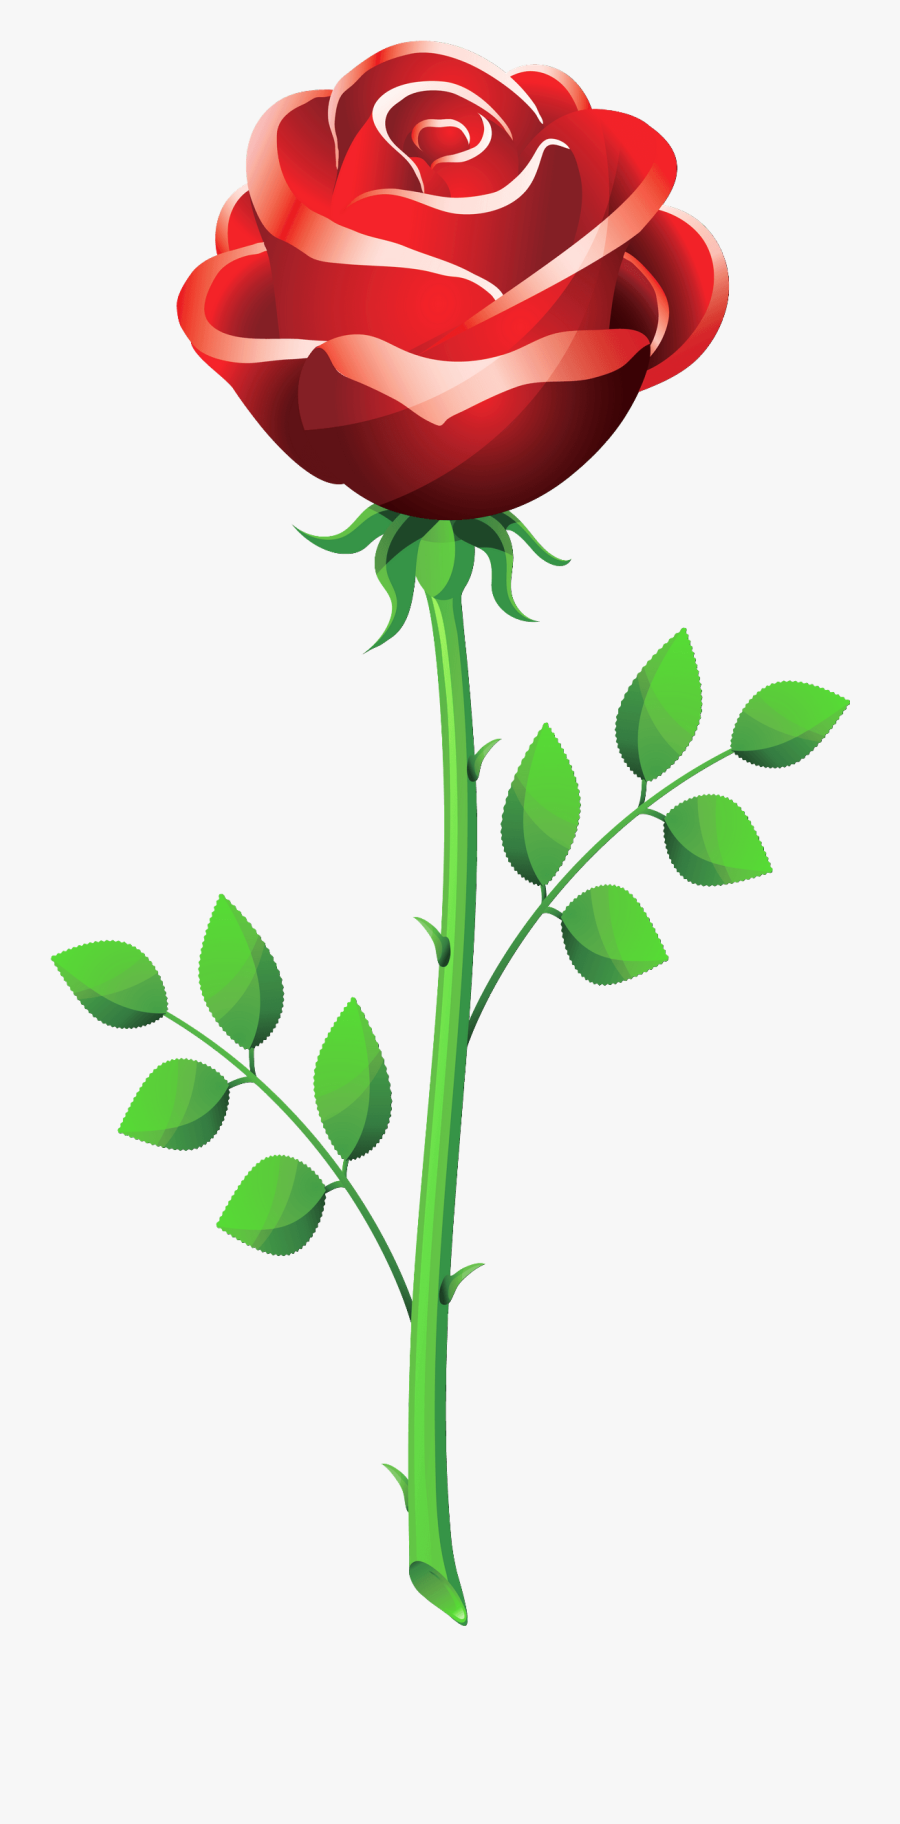 Single Pink Rose Clip Art Free Clipart Image - Rose Flower Vector Png, Transparent Clipart